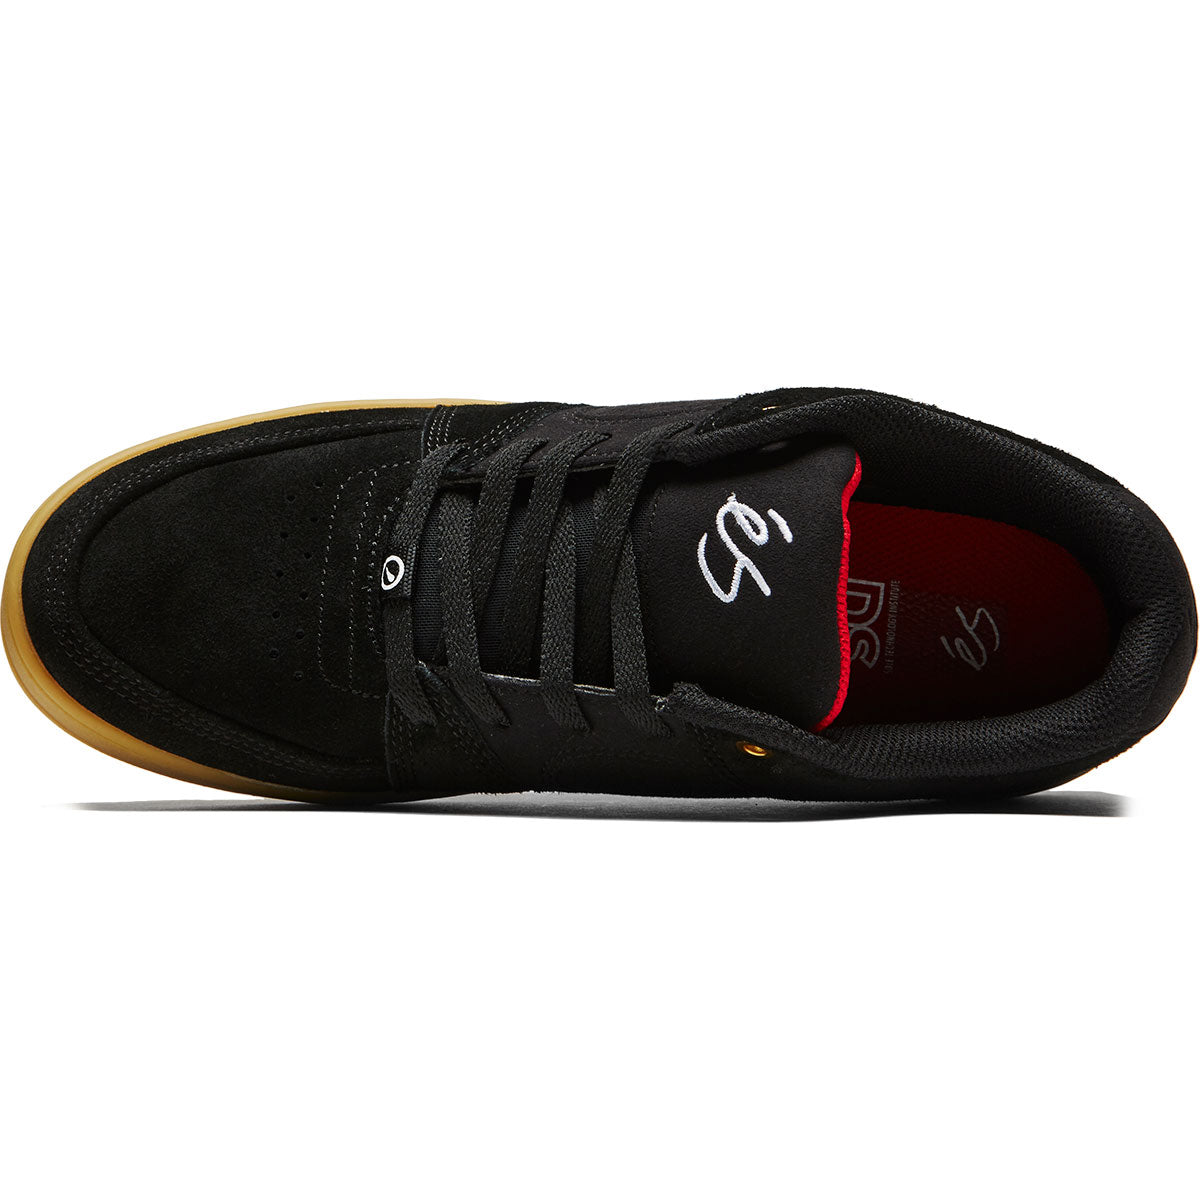 eS Accel Slim Shoes - Black/Gum image 2